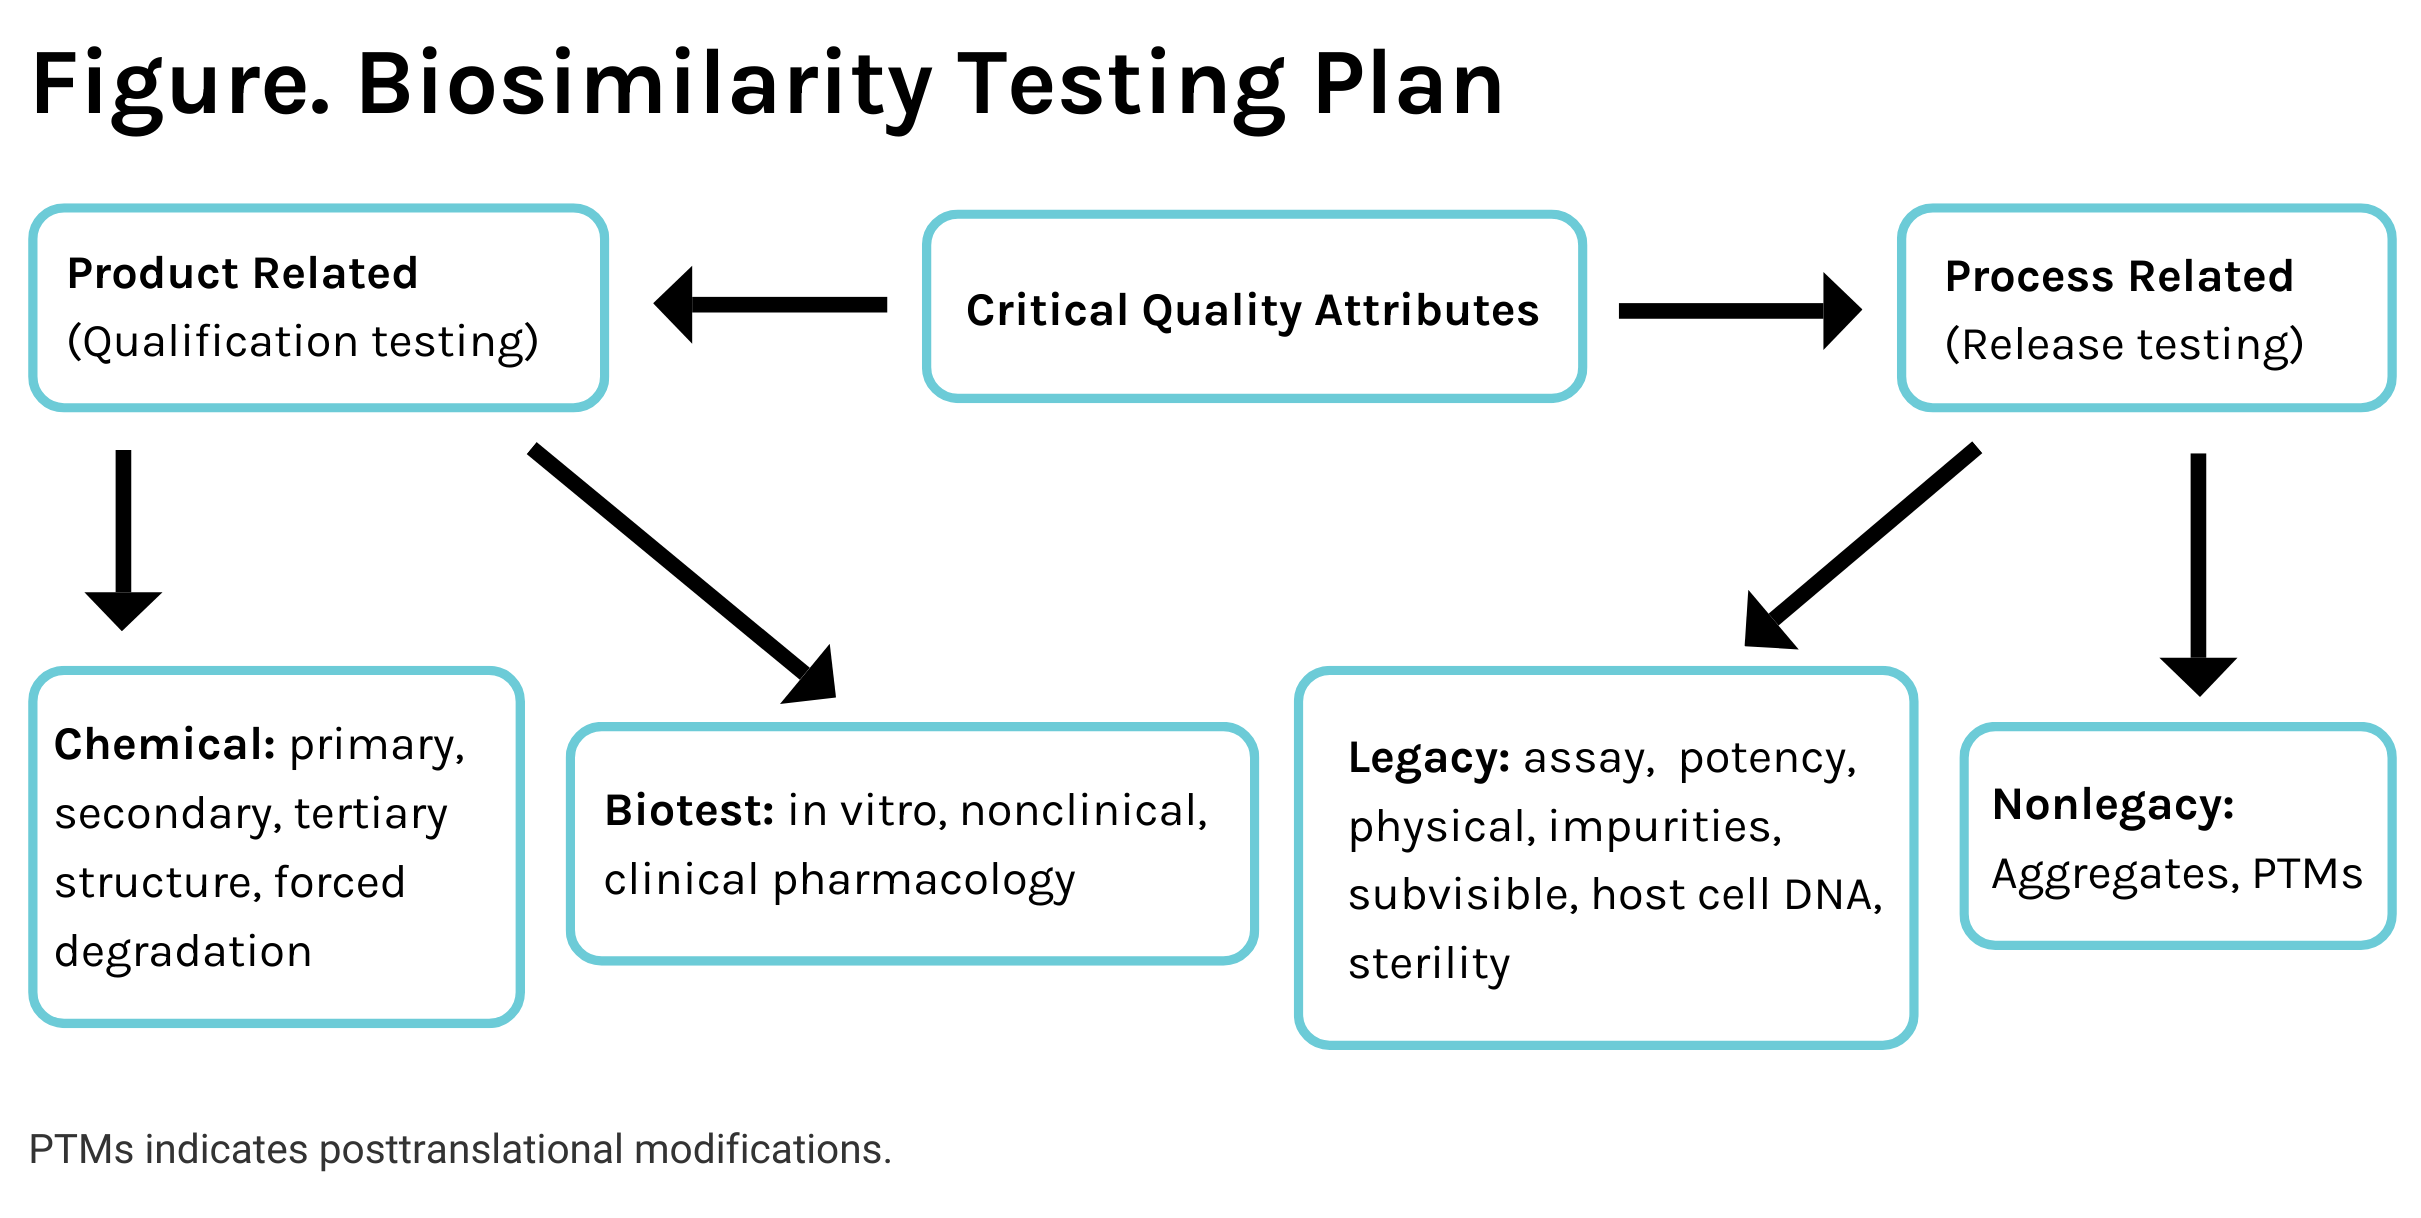 Figure. Biosimilarity Testing Plan